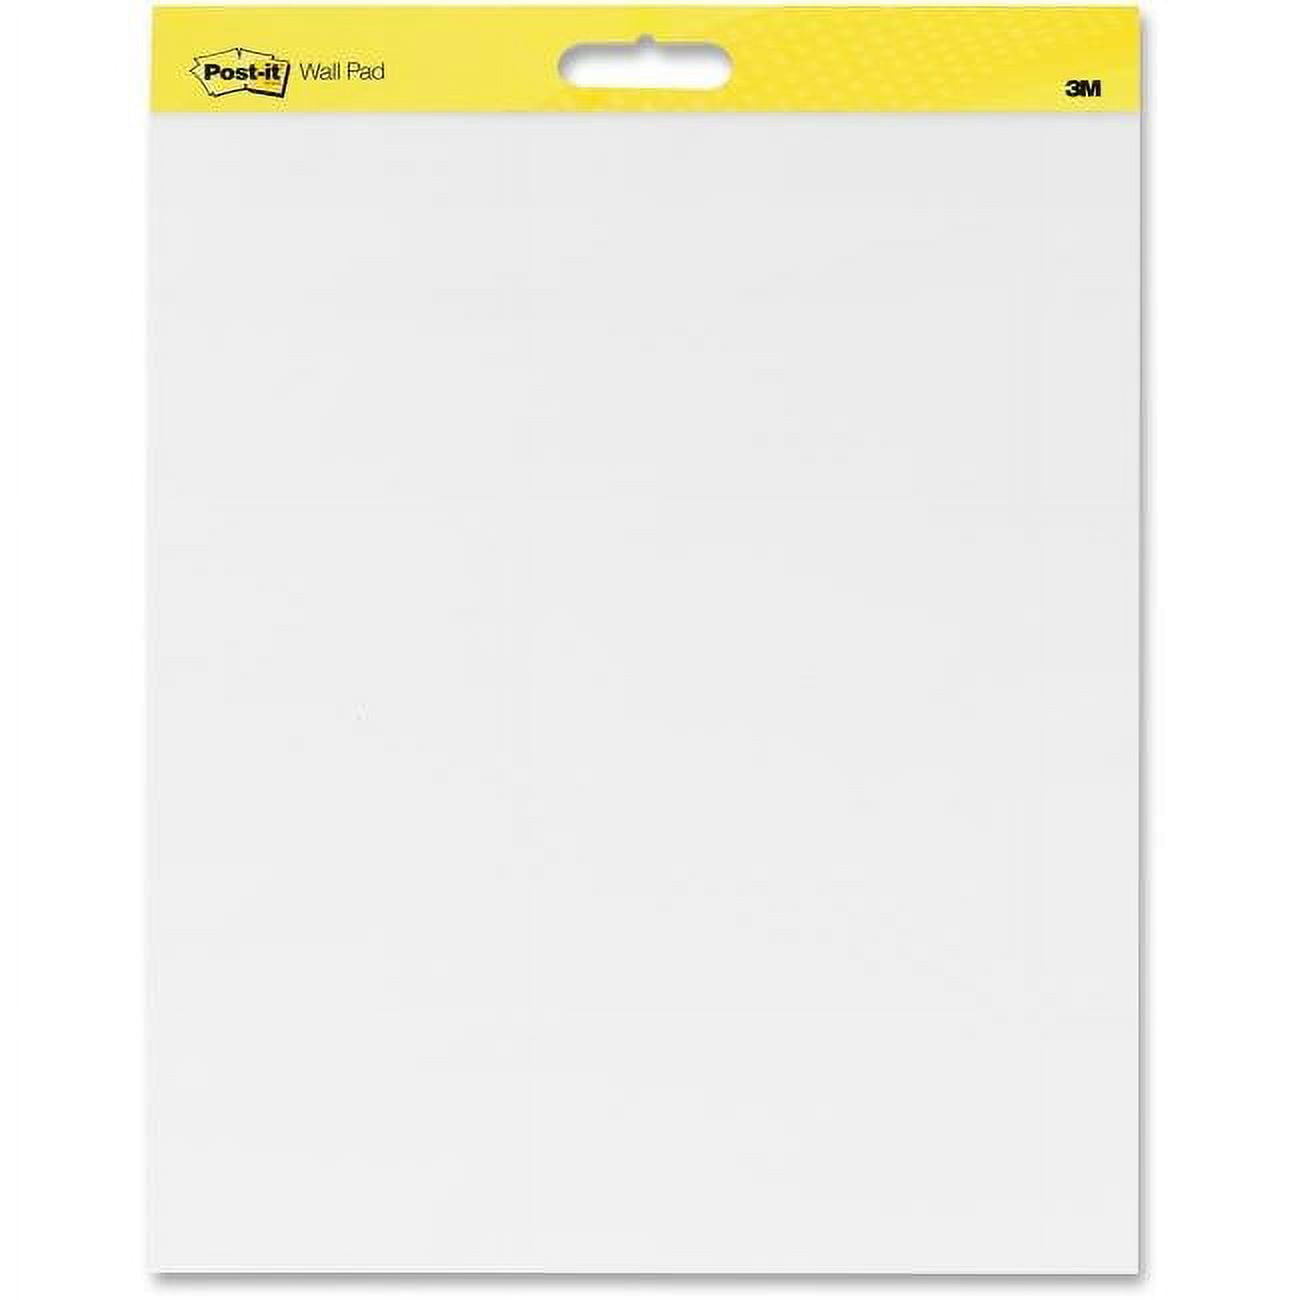 Walmart Global Tech Sticky Notes \- White